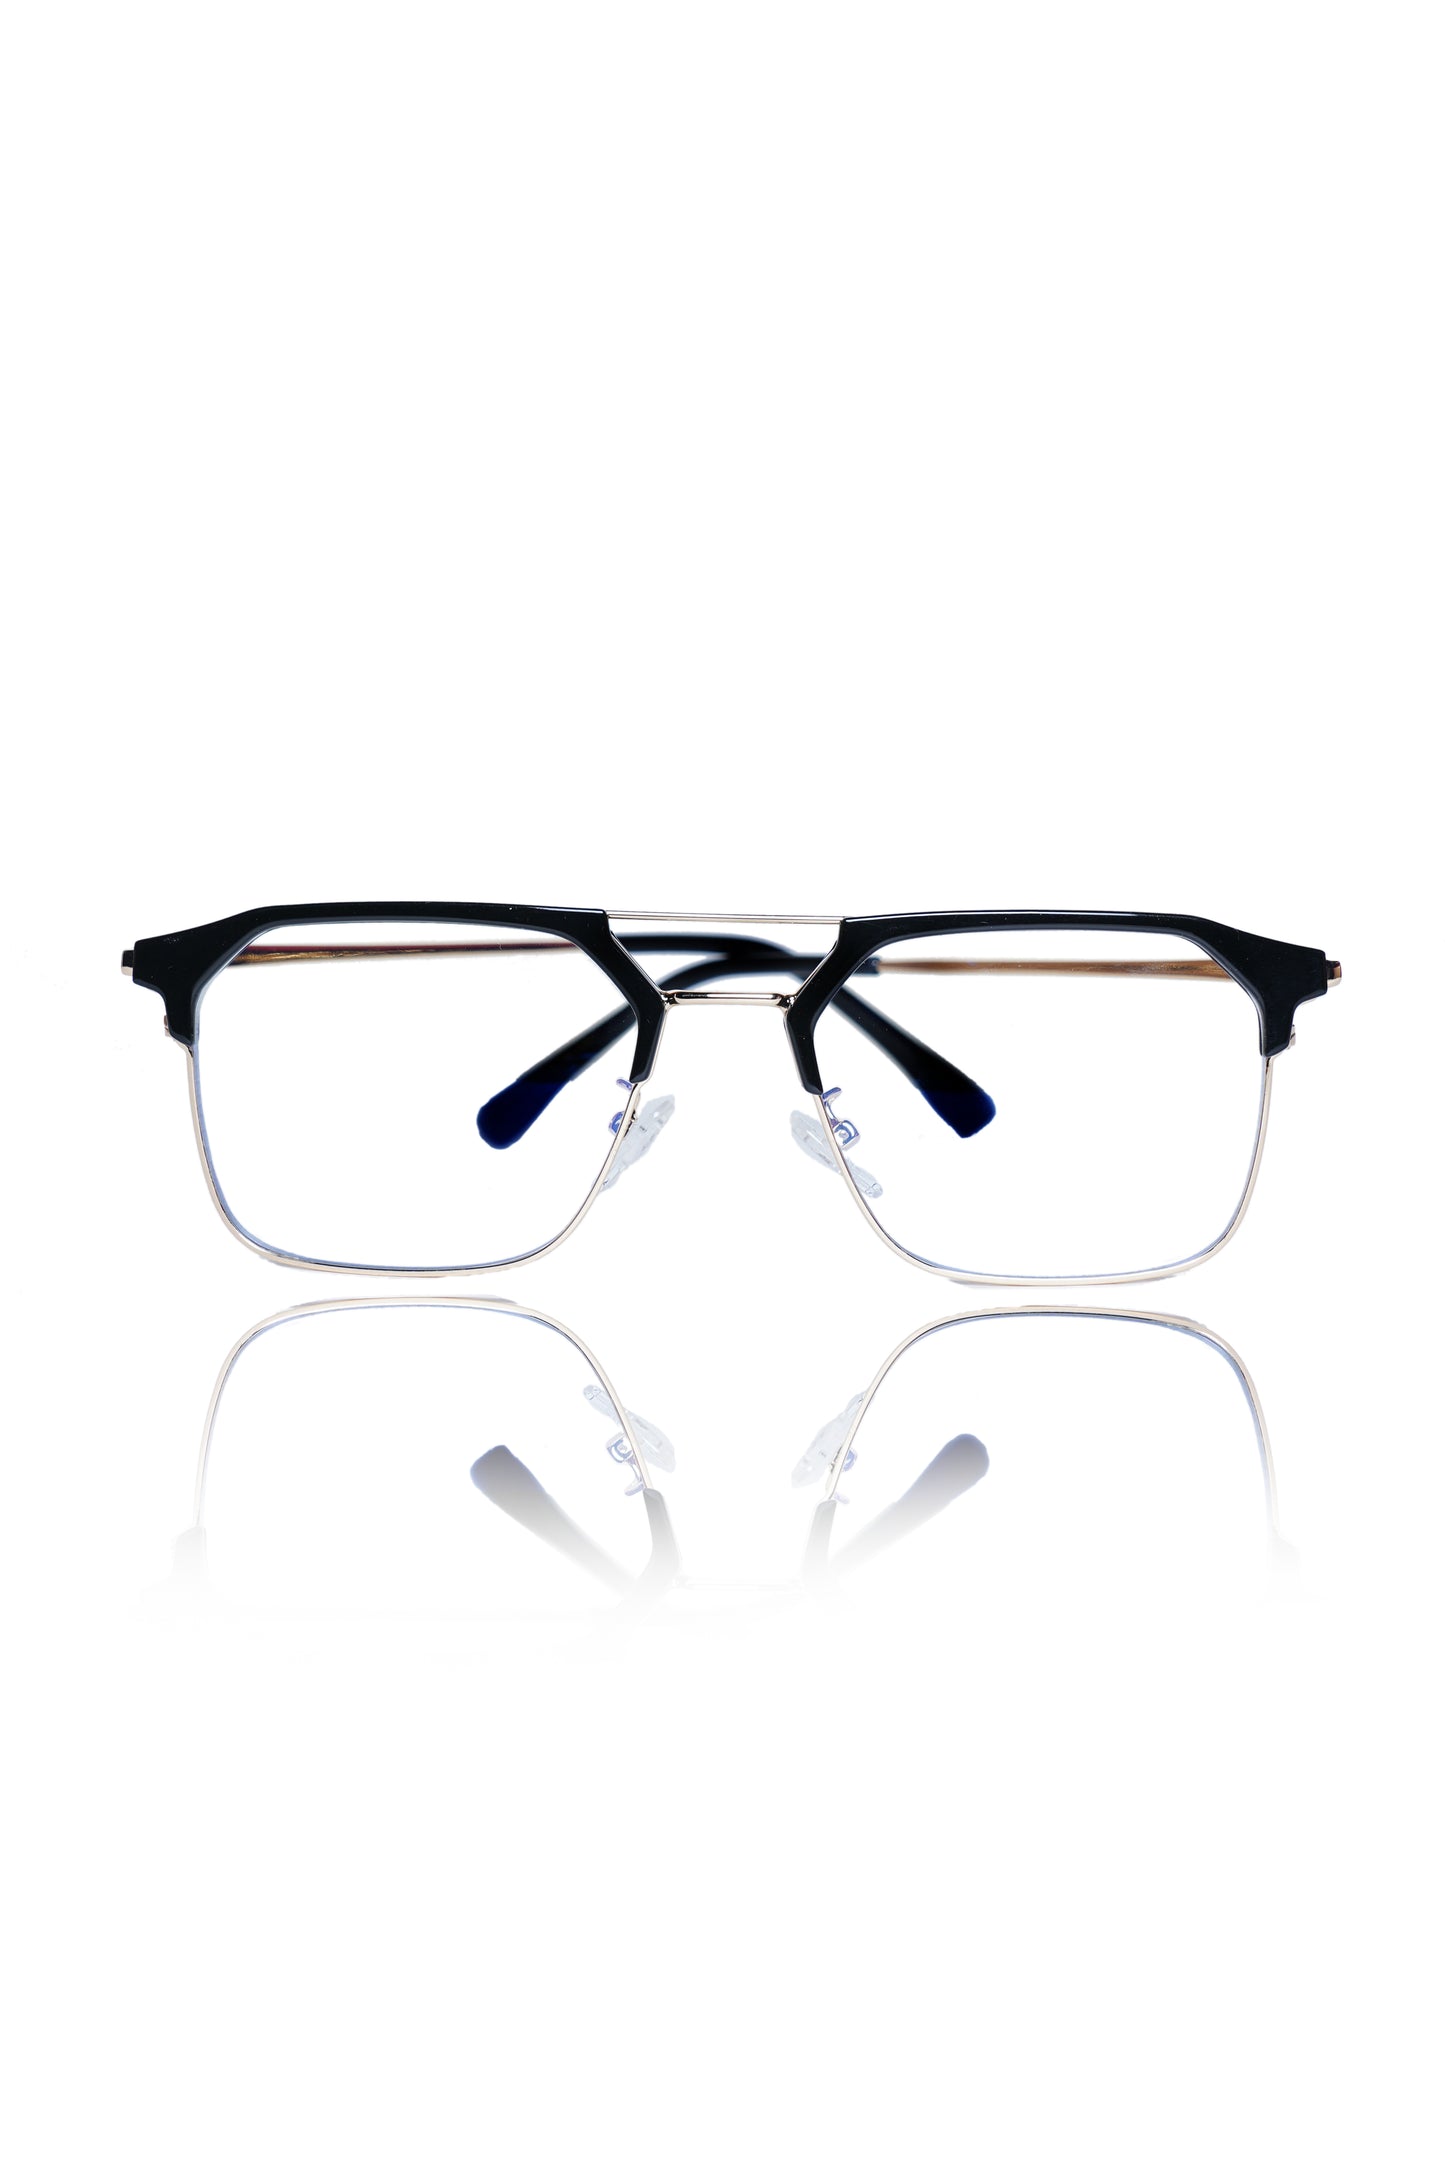 Jodykoes® Premium Series Classic Vintage Eyewear Eyeglasses Spectacles with Blue Light Anti Glare Glasses Frame for Men and Women  (Black & Gold)